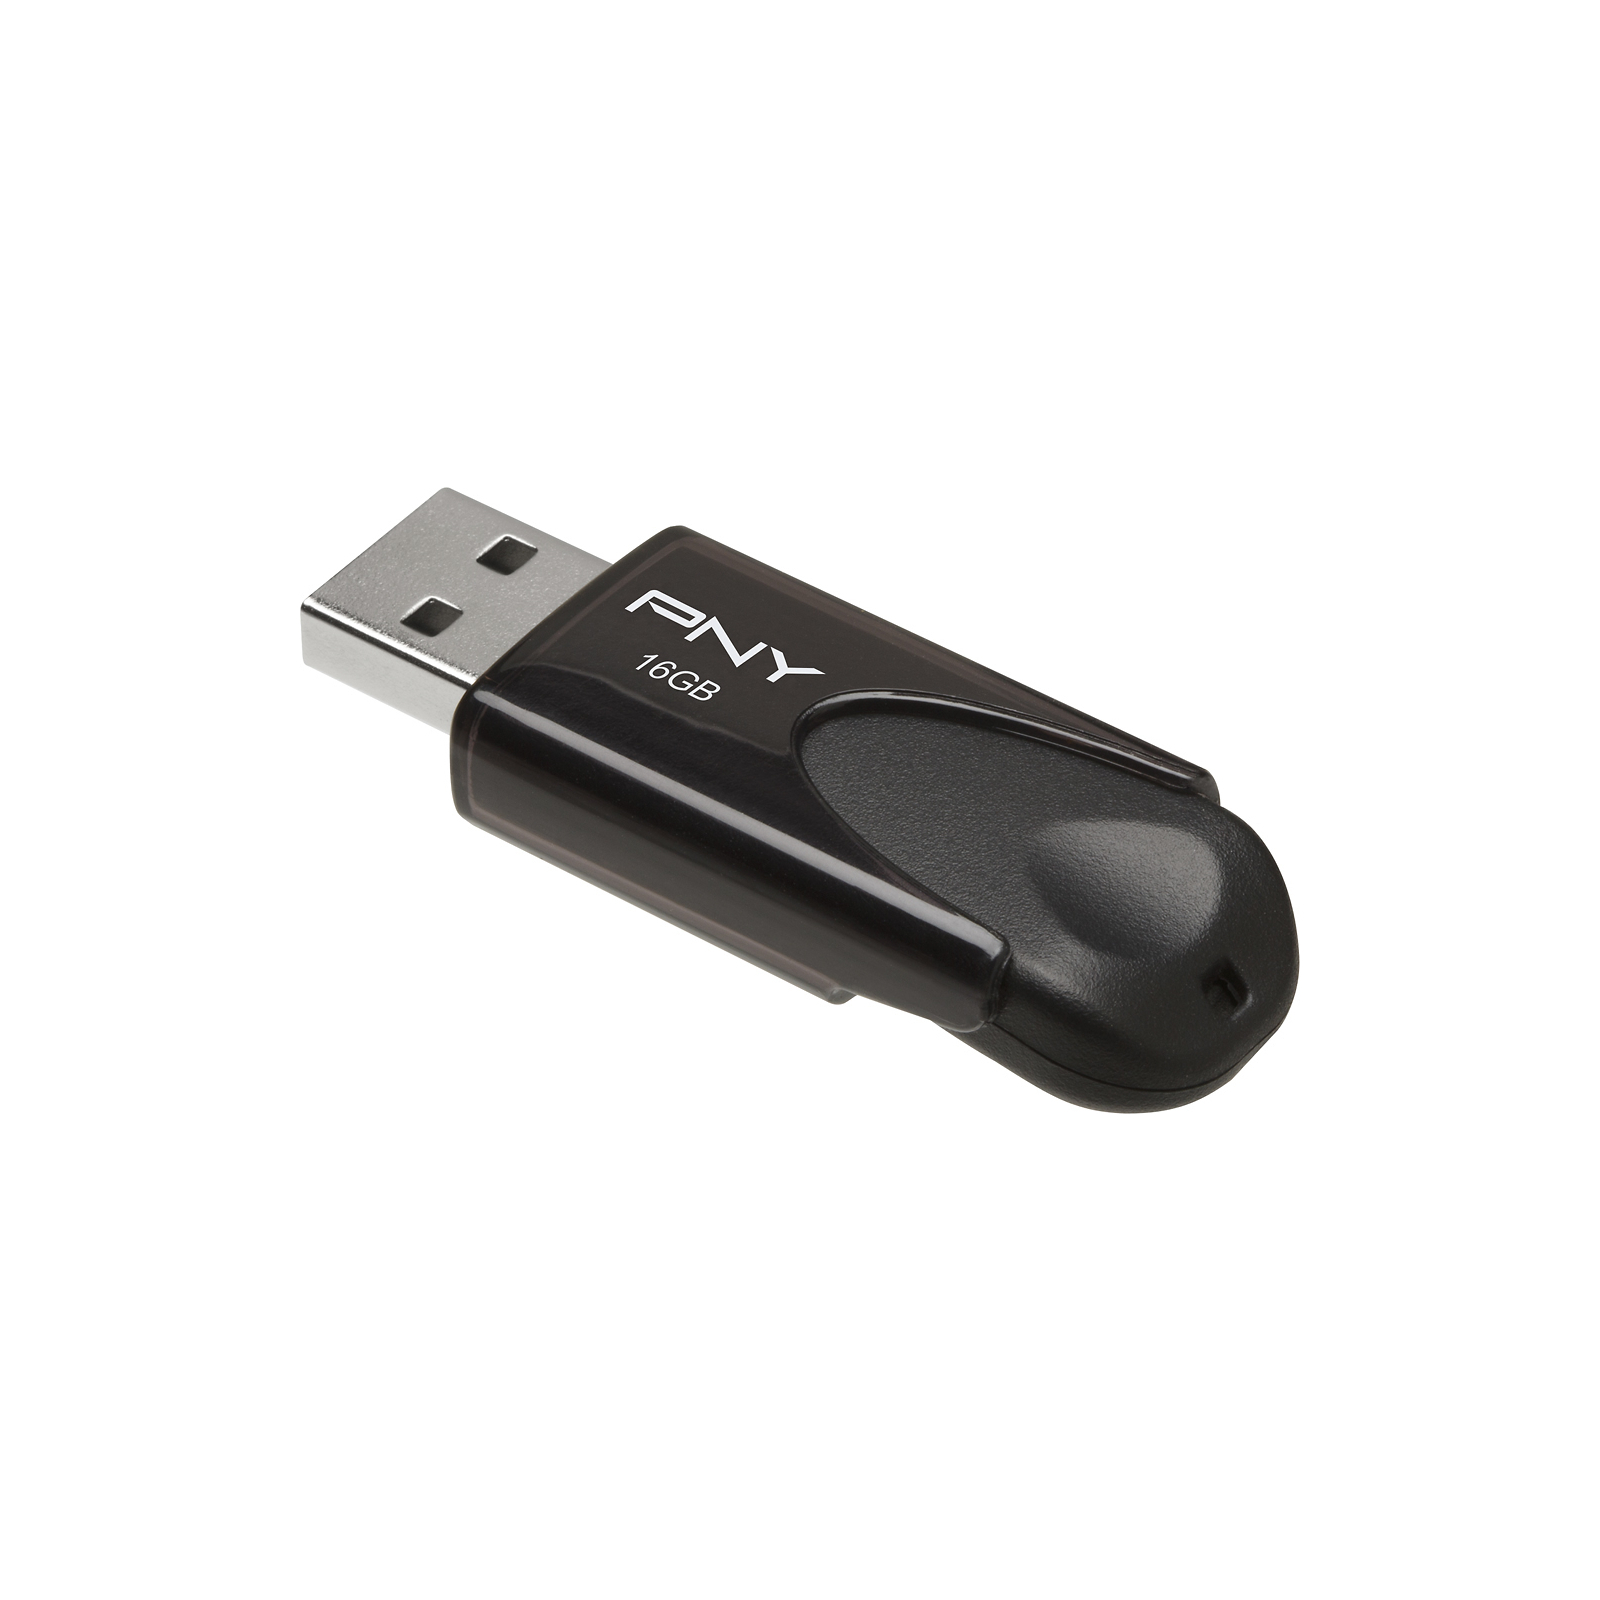 USB флеш накопитель PNY flash 16GB Attache4 Black USB 2.0 (FD16GATT4-EF) изображение 3